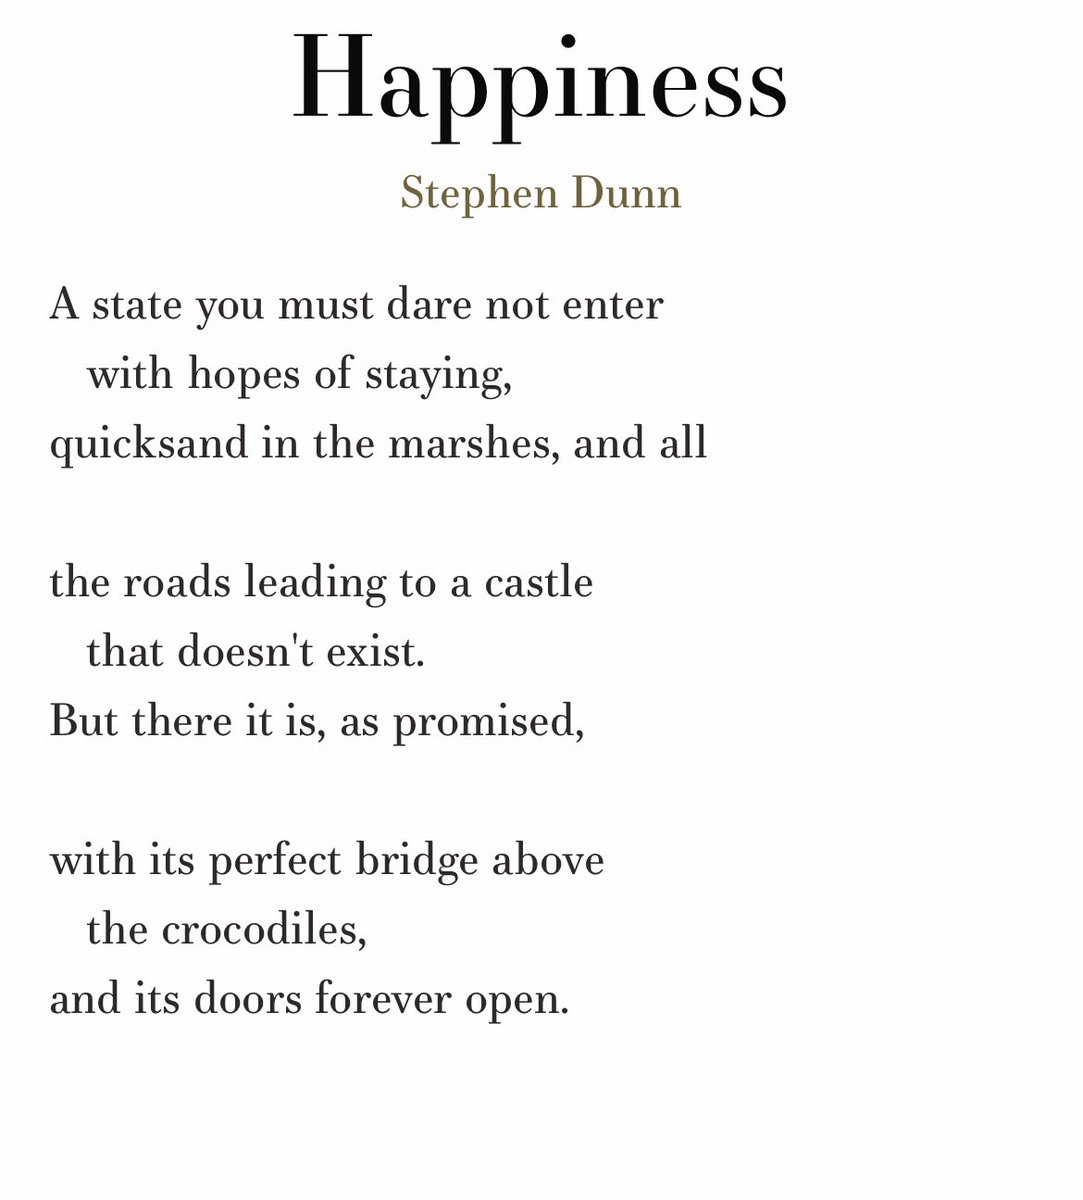 #InternationalHappinessDay
                          
                              🐊
Happiness
~ Stephen Dunn